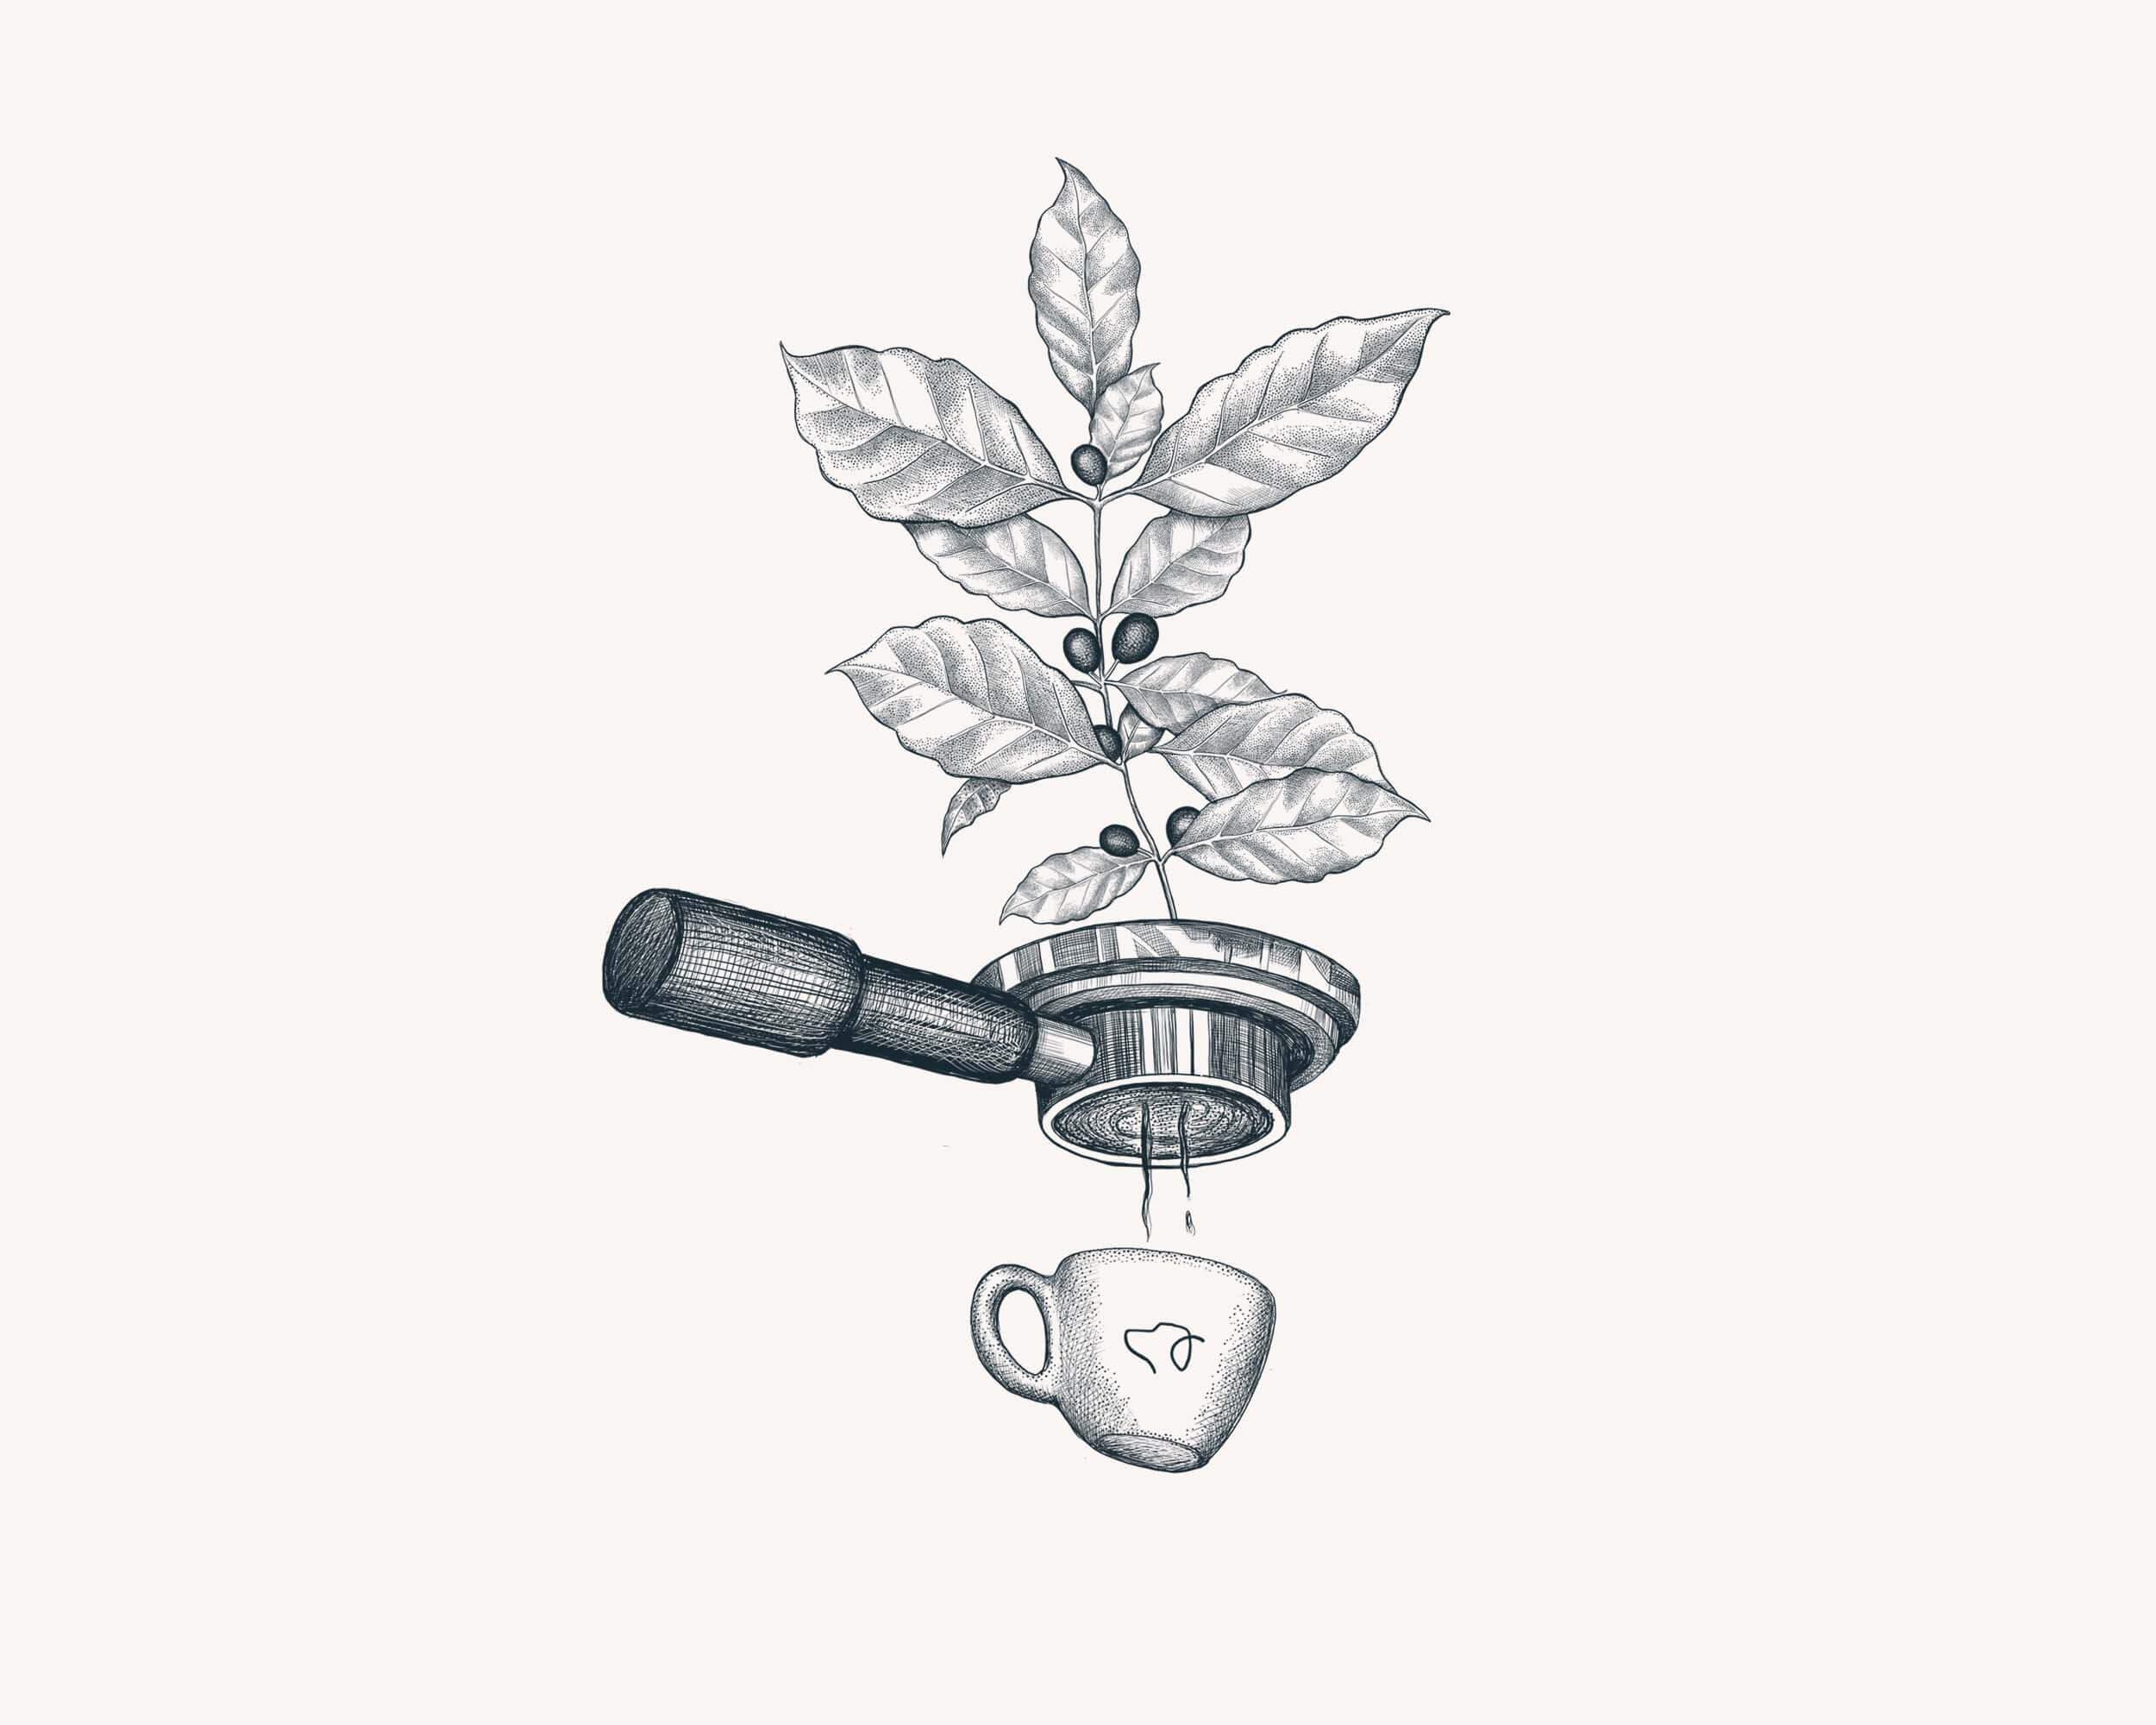 soil-to-sip-coffee-illustration.jpg